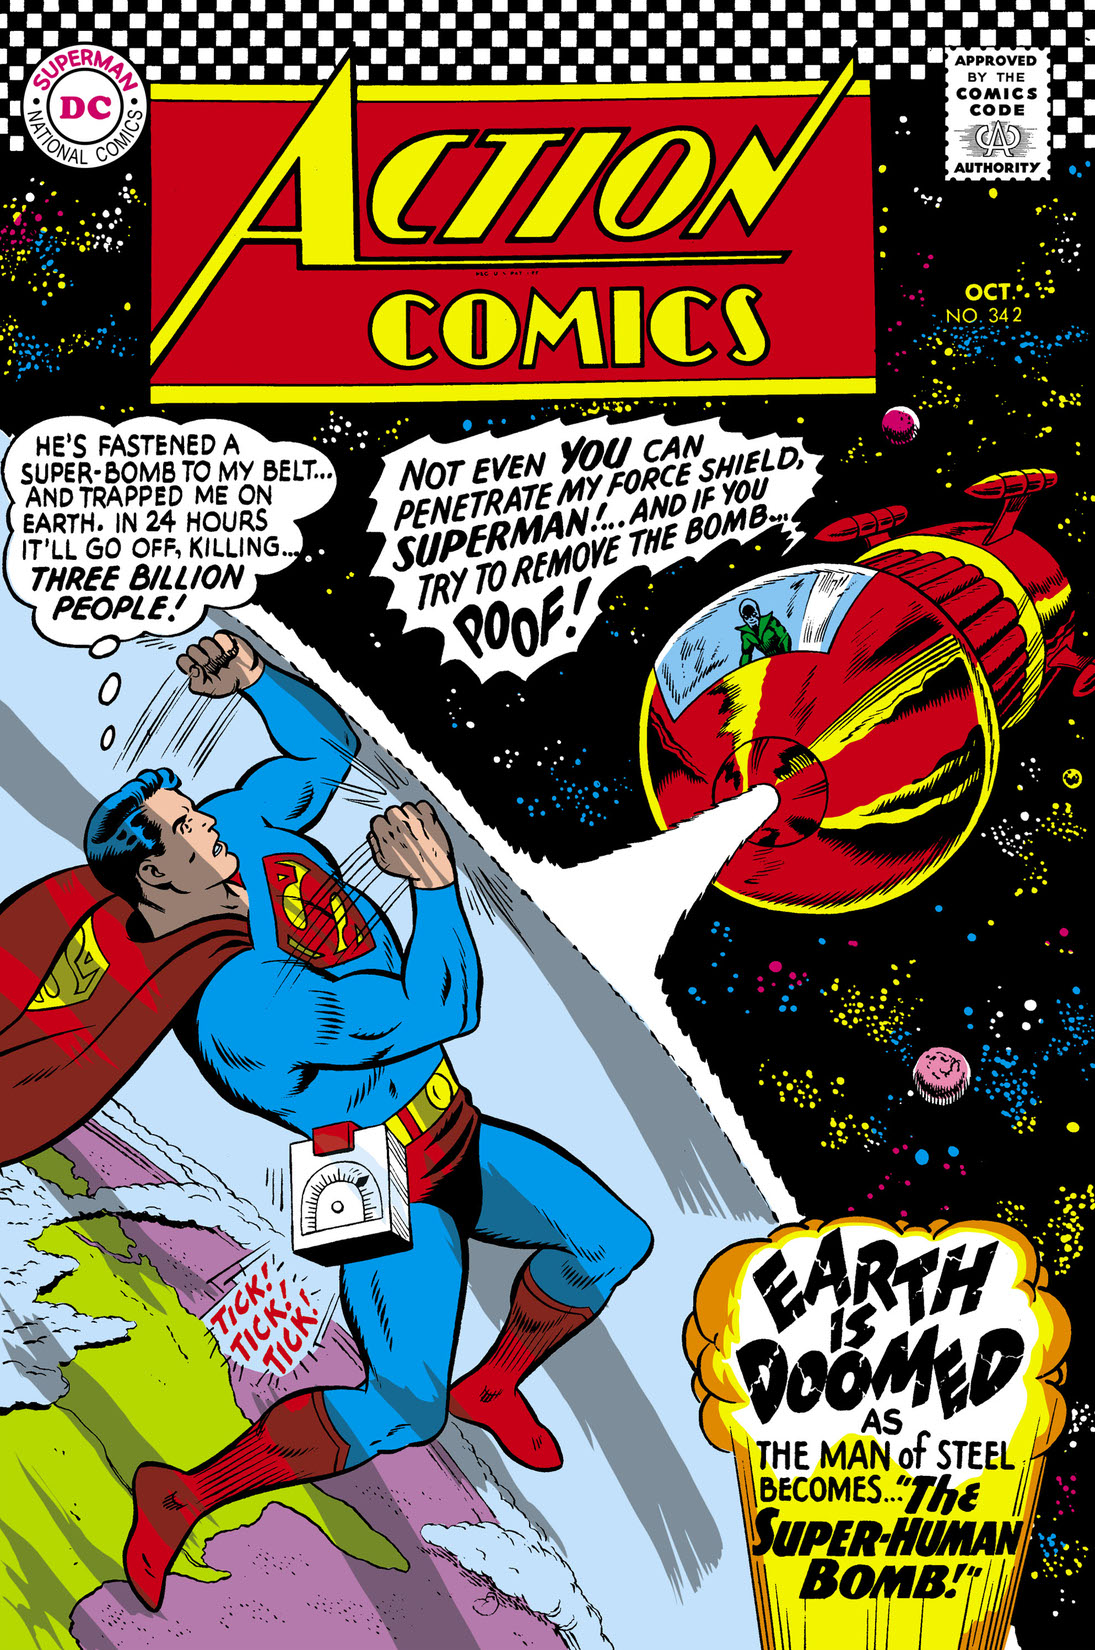 Action Comics (1938-) #342 preview images